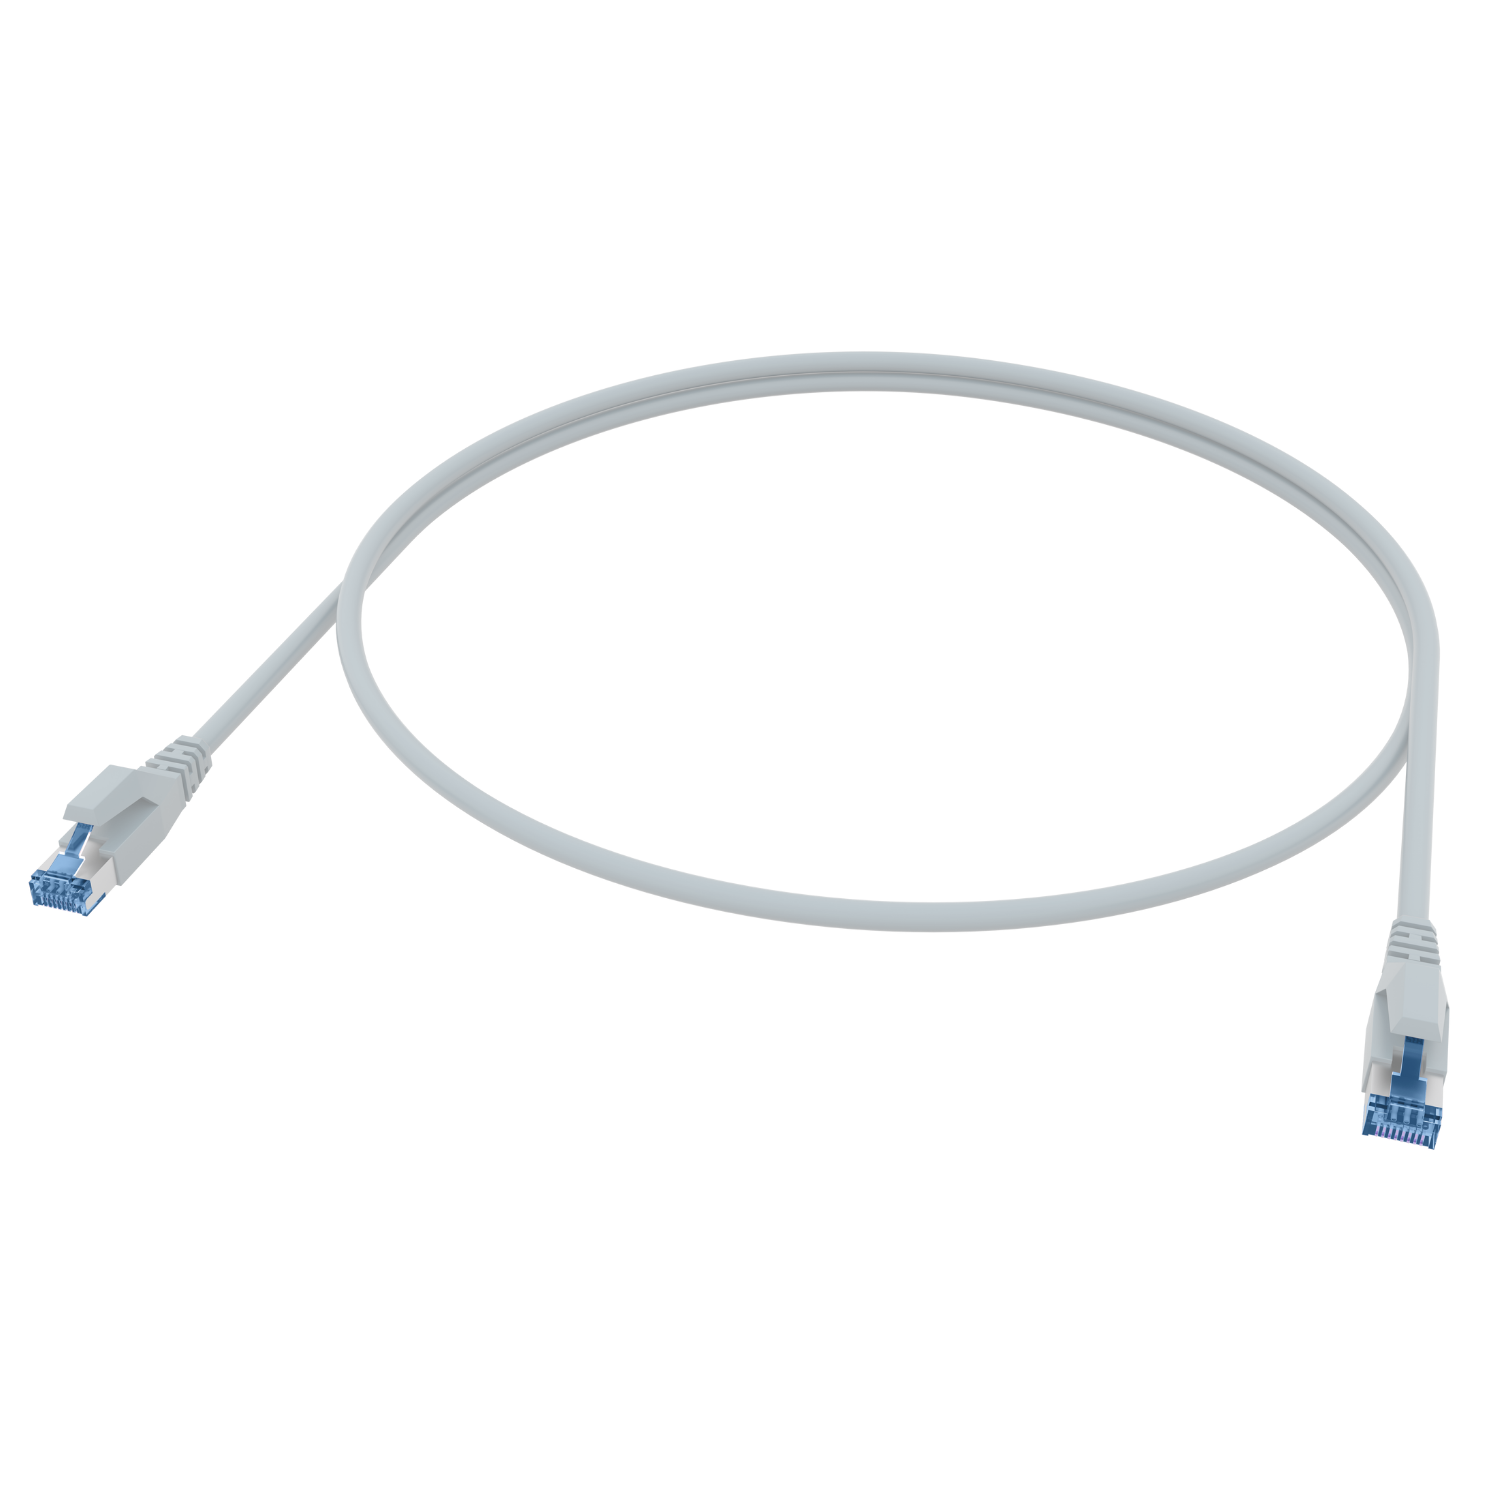 AIXONTEC 12m RJ45 Lankabel Ethernetkabel Gigabit, Netzwerkkabel, 12,0 m 10 Universal